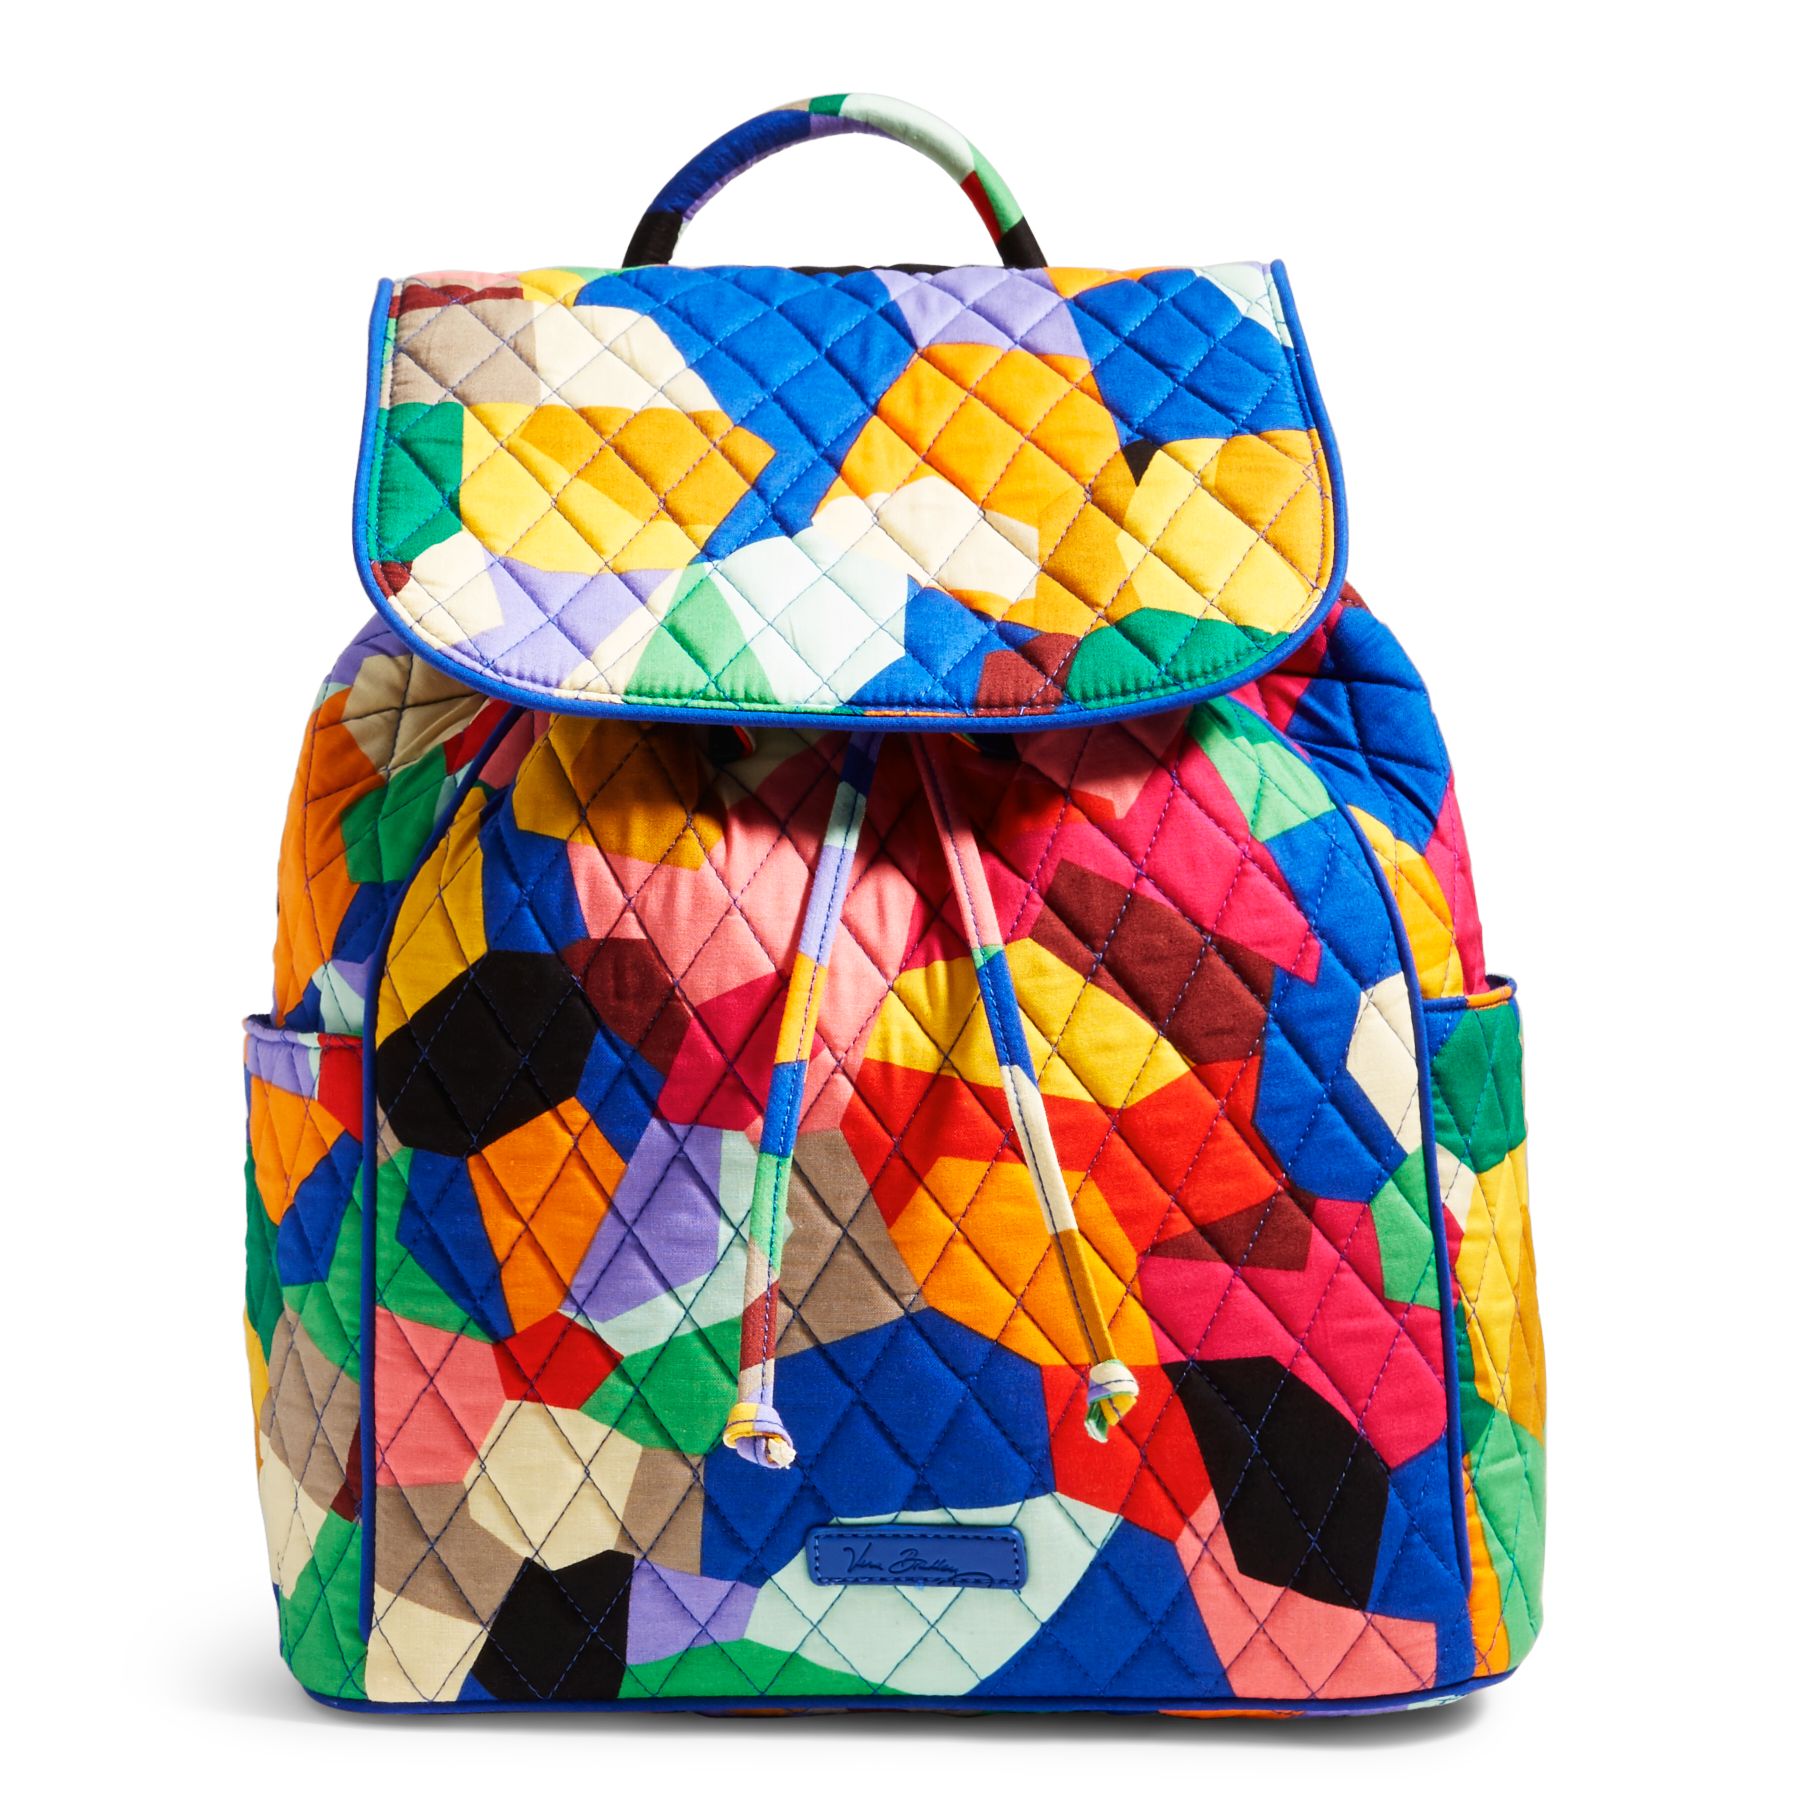 Vera Bradley Drawstring Backpack Purse in Pop Art | eBay